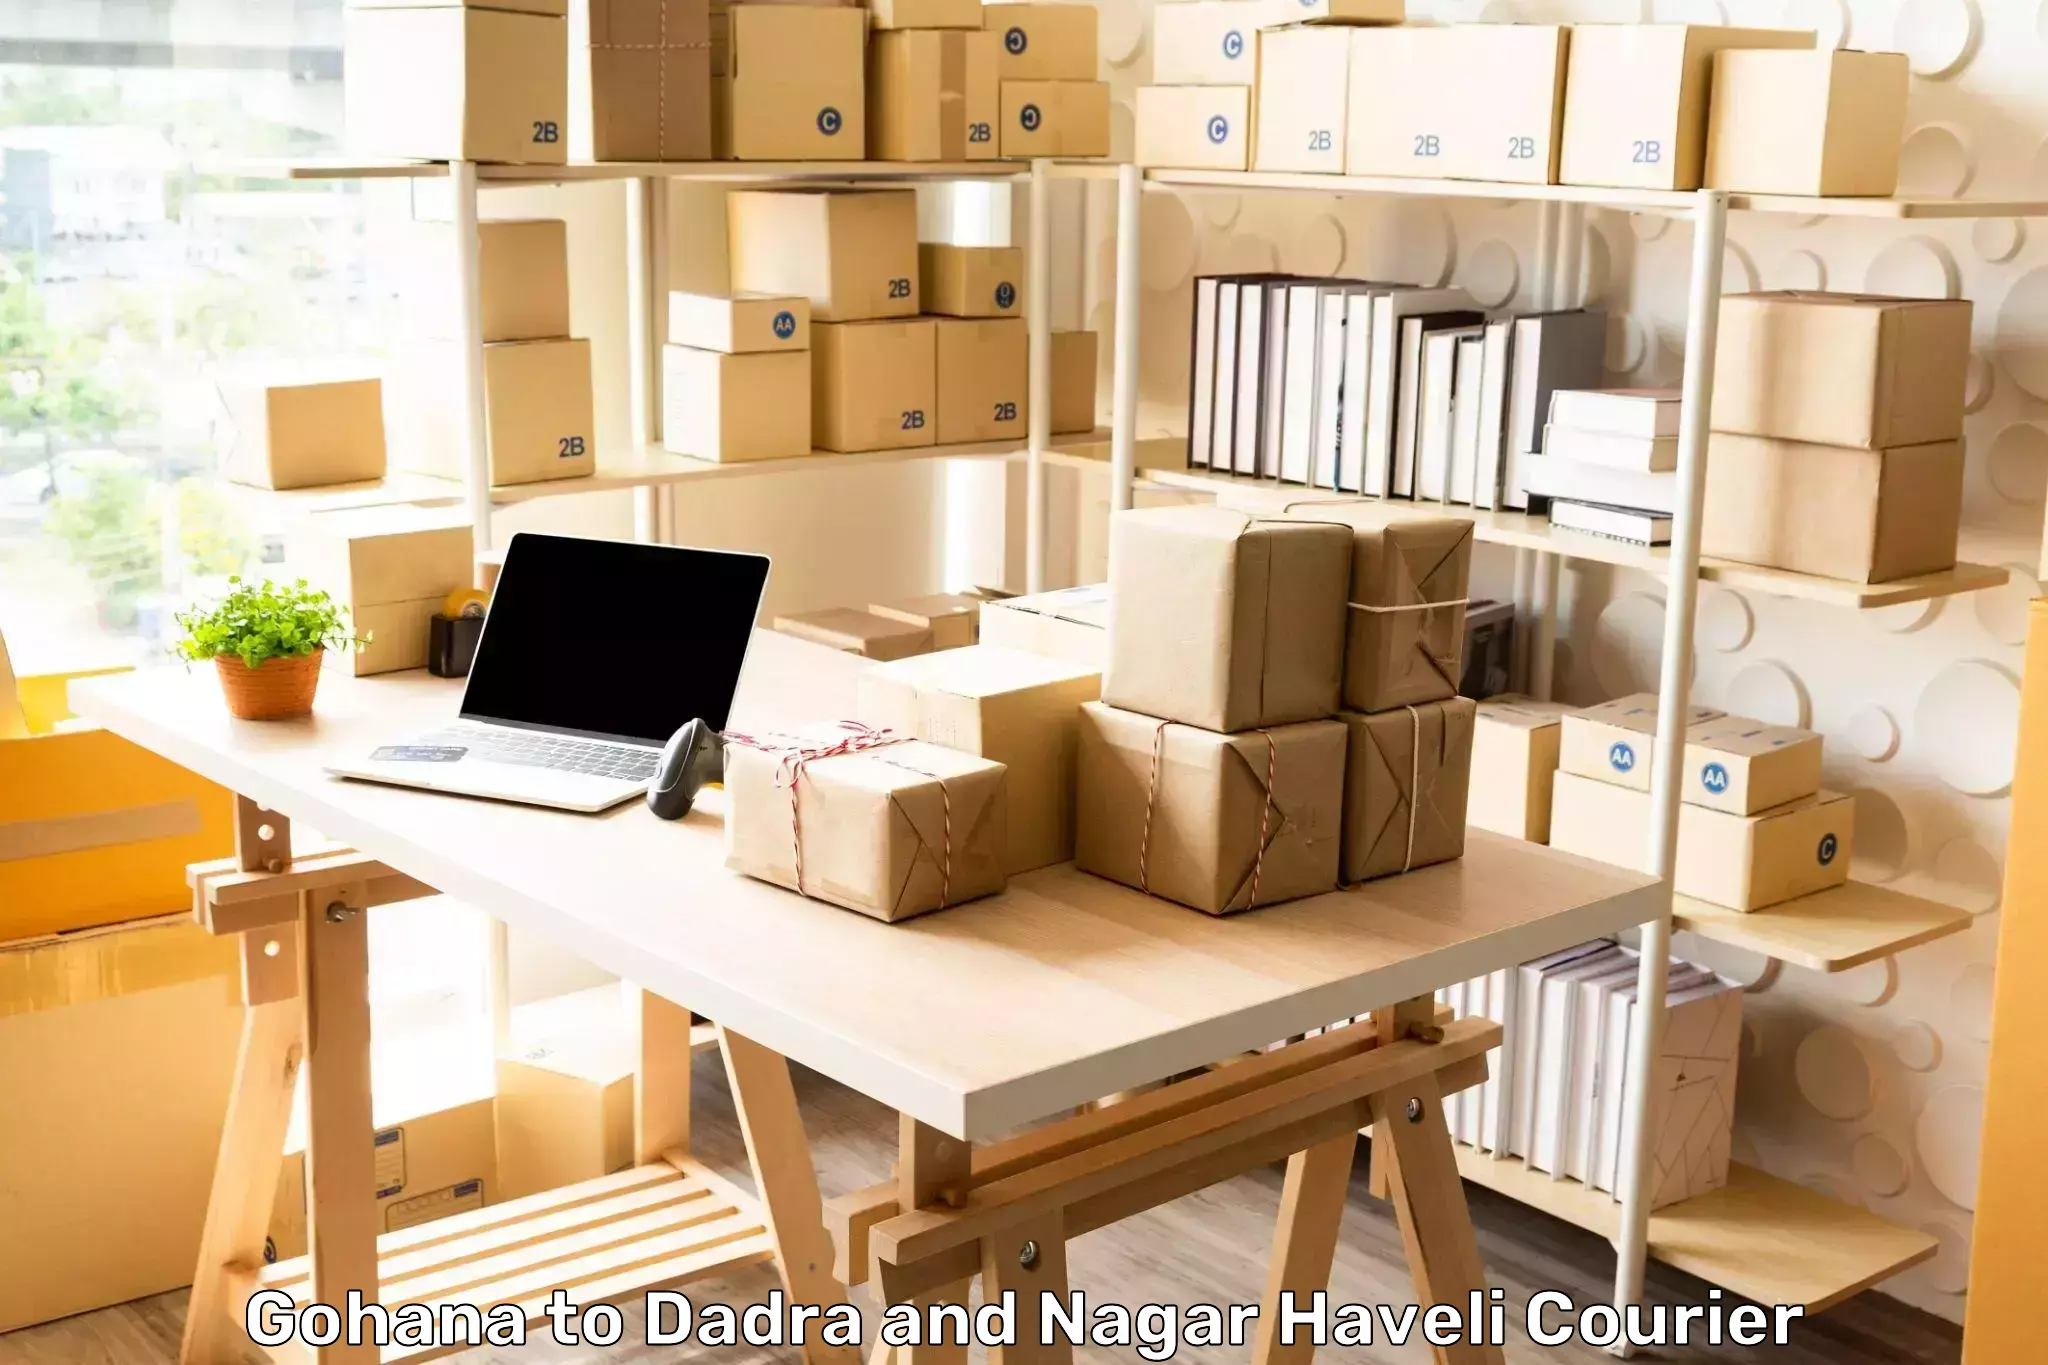 Specialized shipment handling Gohana to Dadra and Nagar Haveli